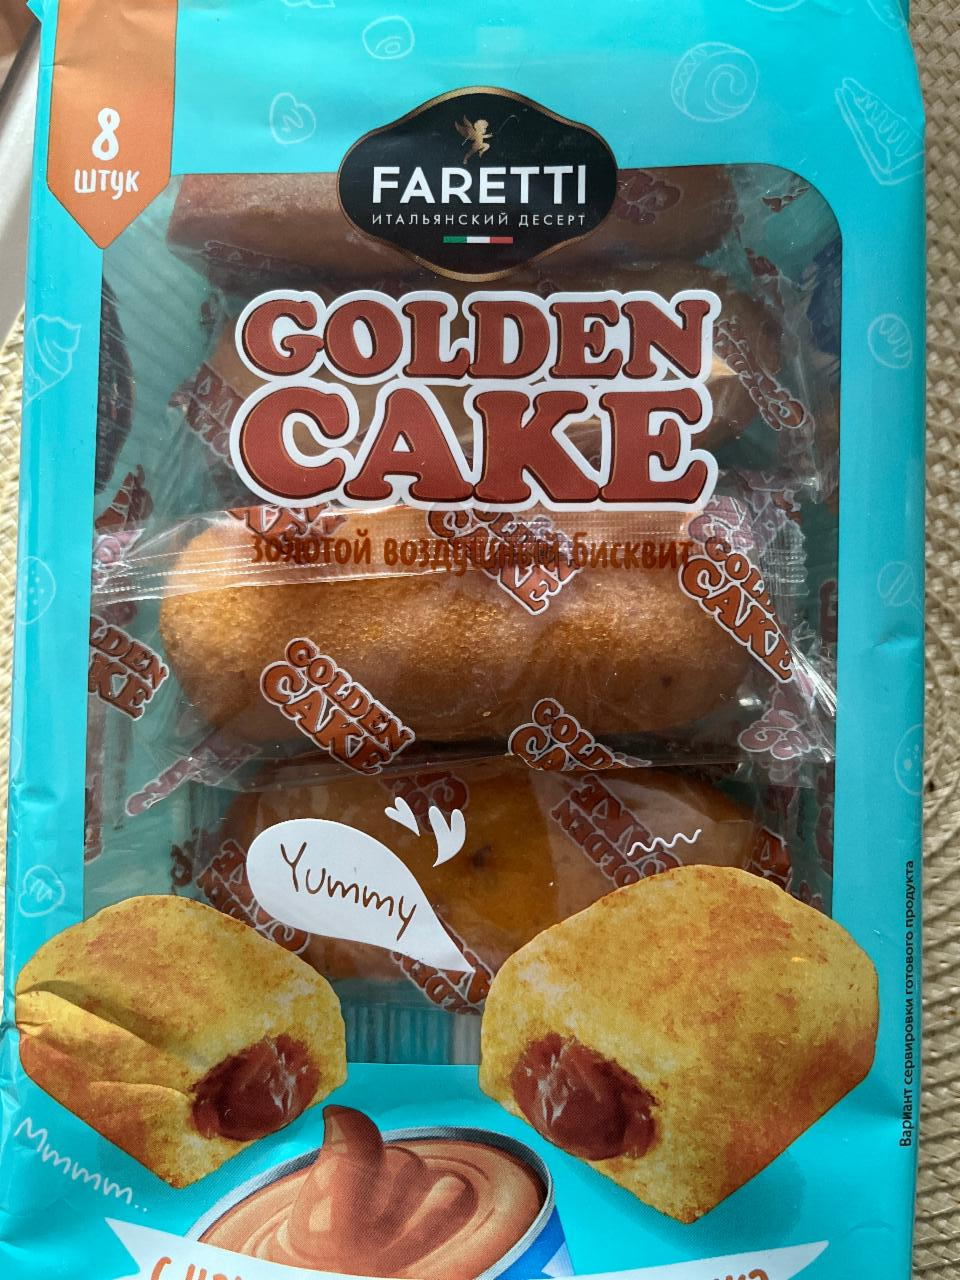 Фото - Golden Cake с начинкой Вареная сгущенка Faretti